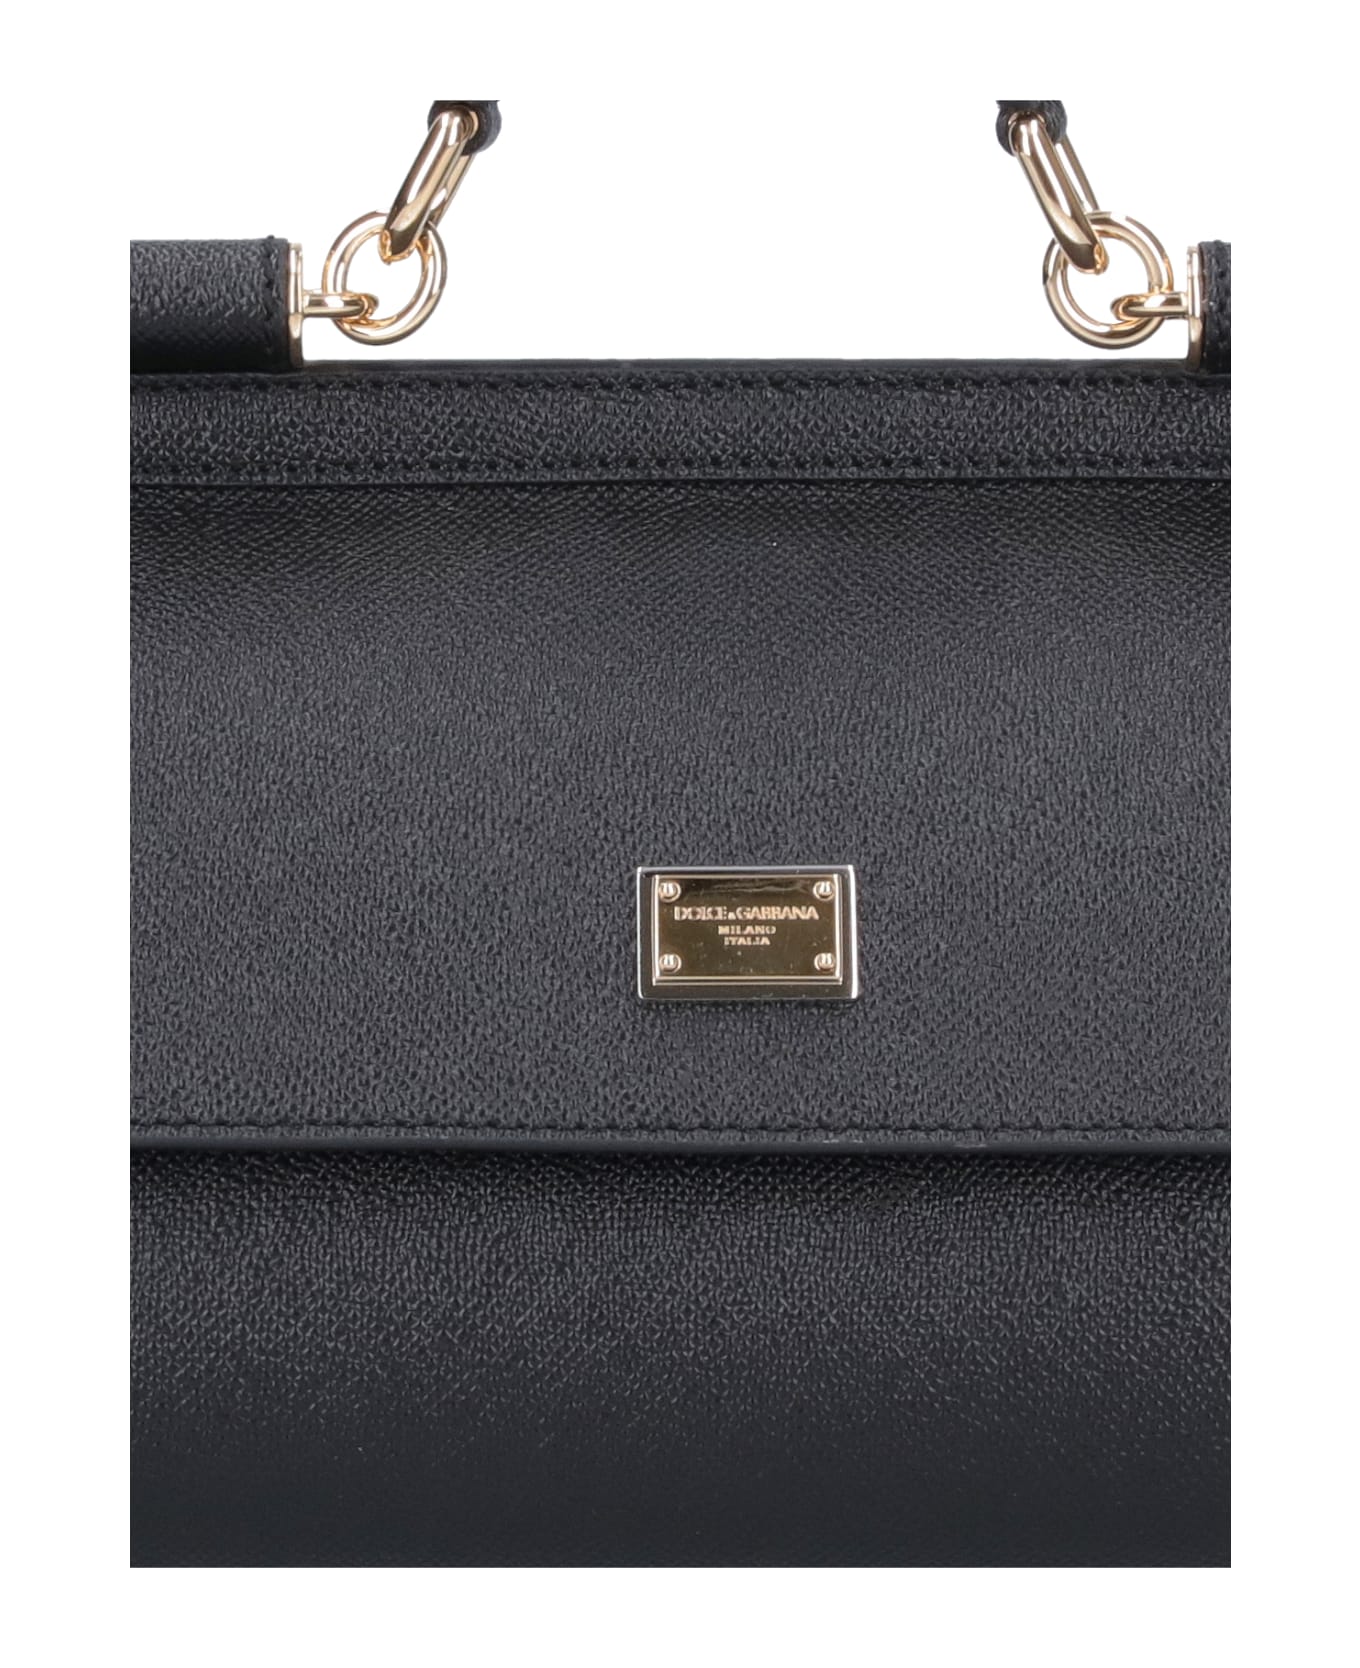 Dolce & Gabbana Sicily Handbag - Black